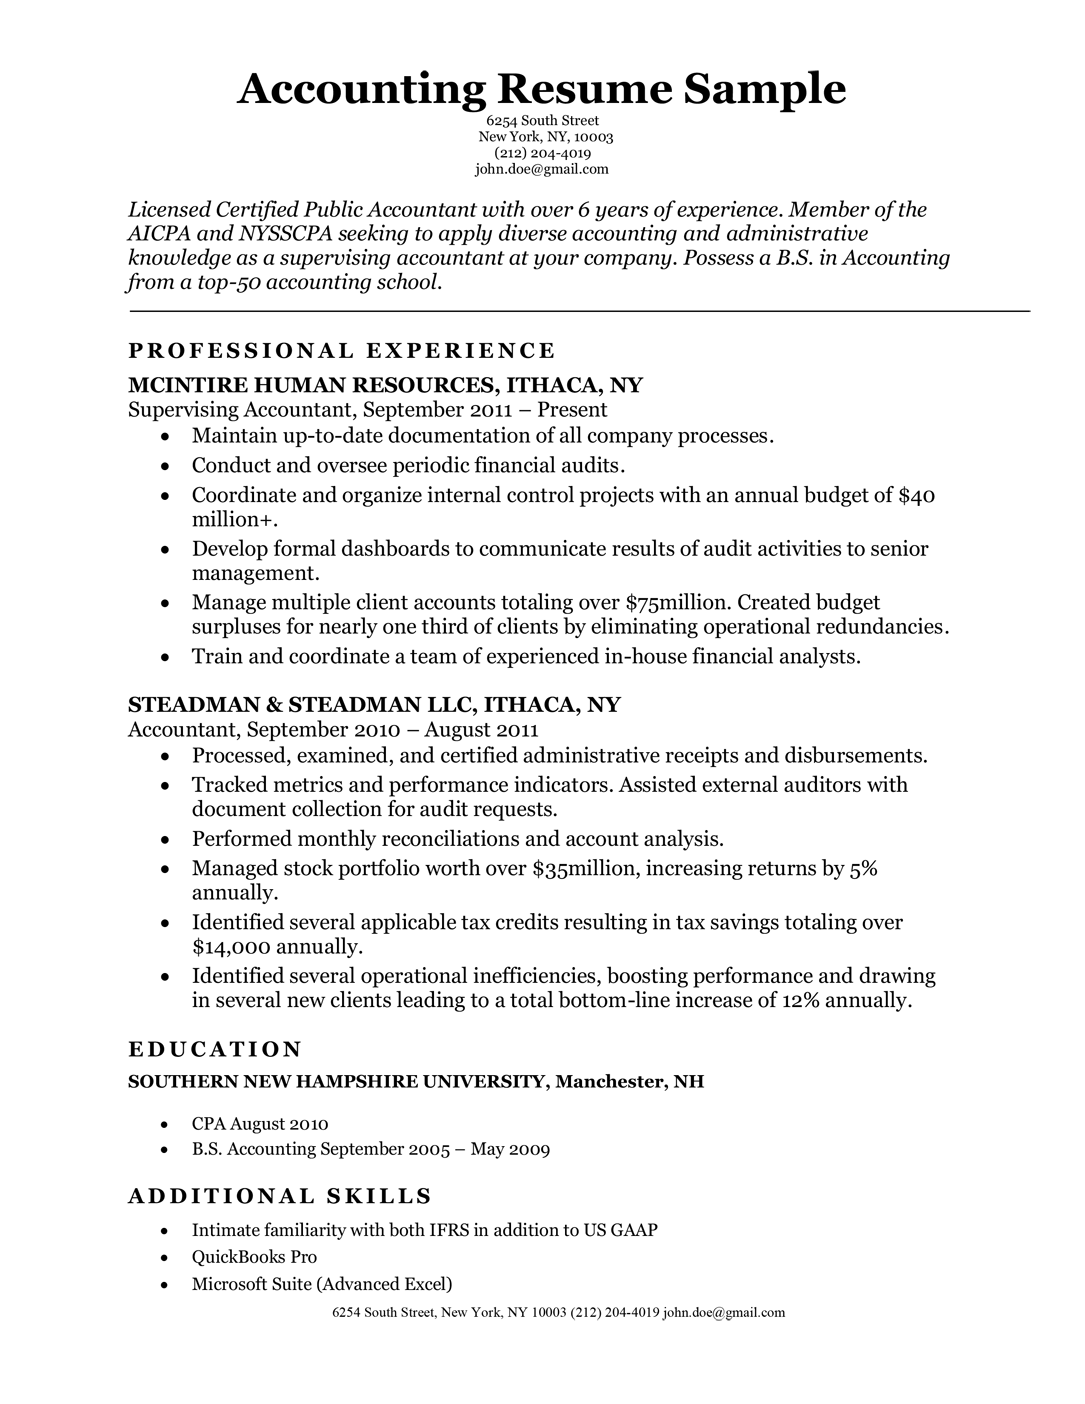 Accountant Resume Sample from resumecompanion.com